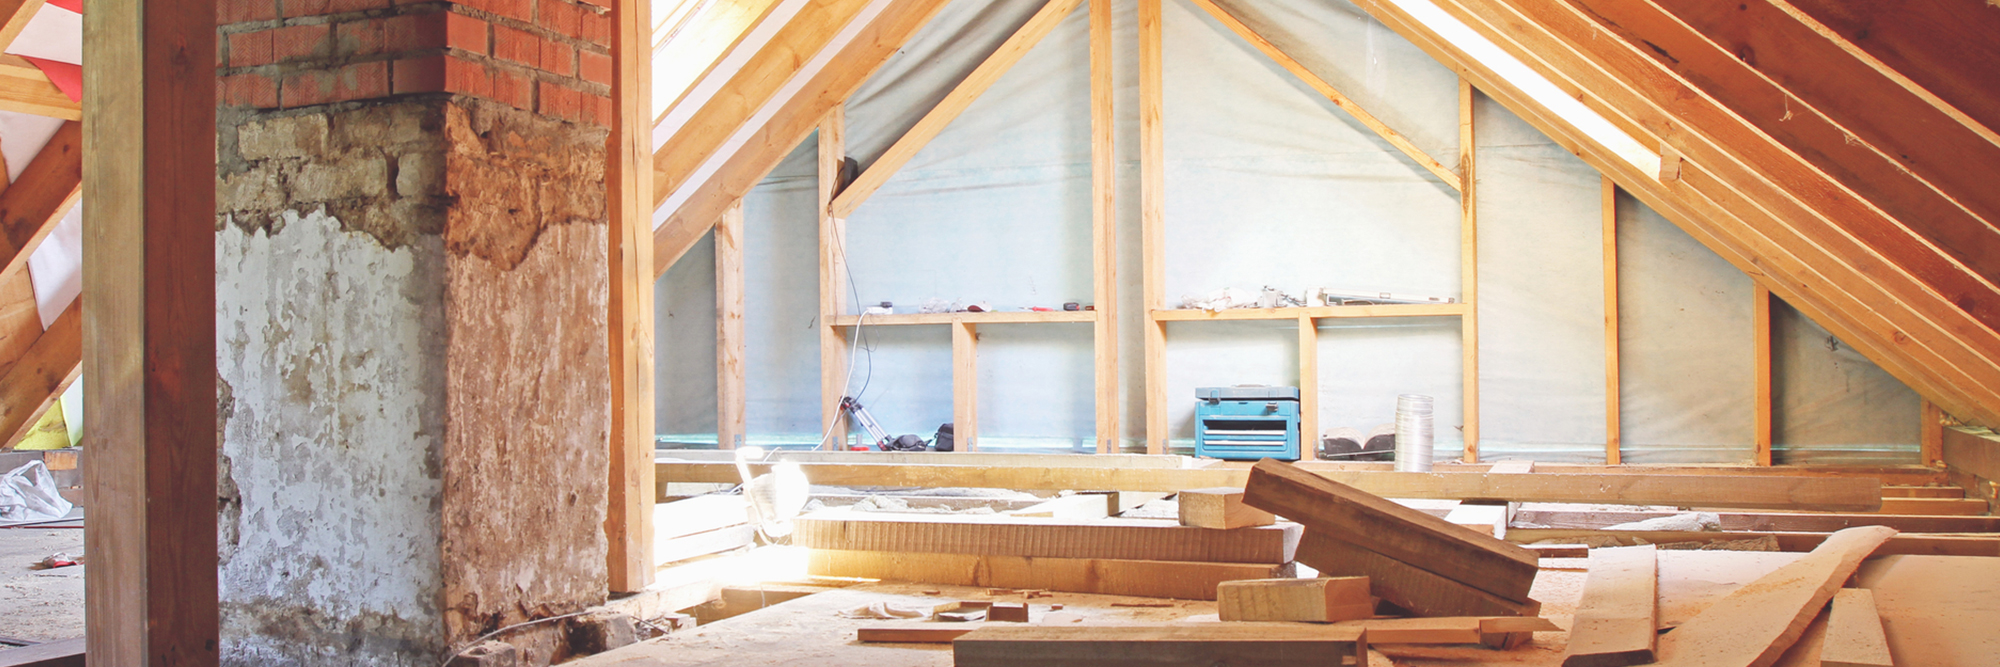 attic insulation services pricing